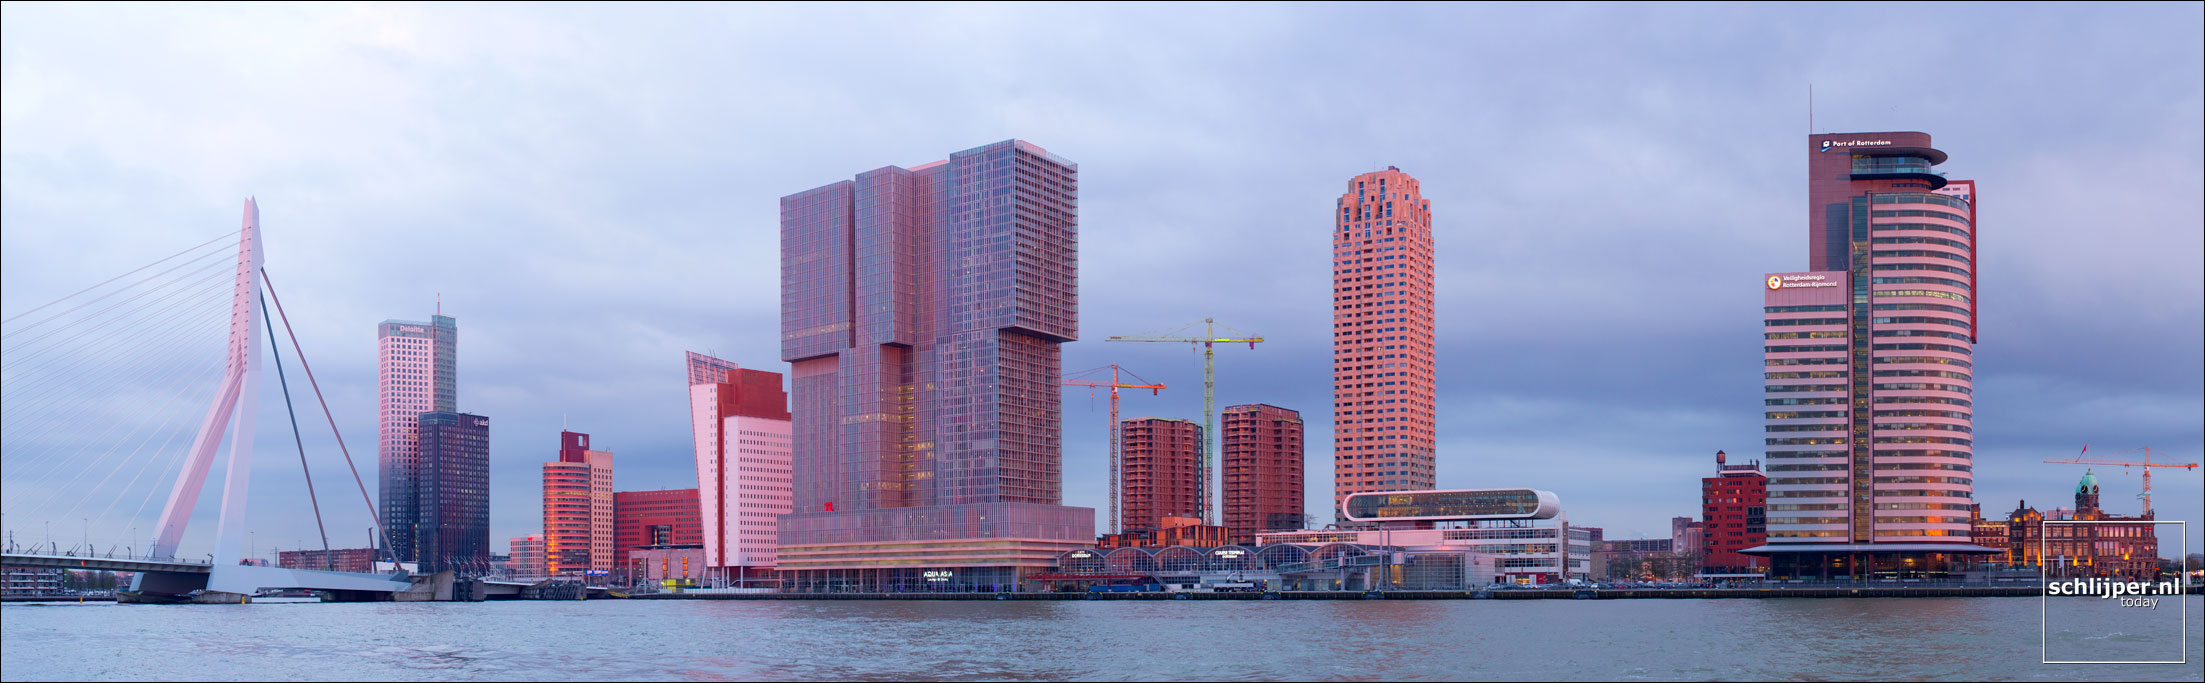 Nederland, Rotterdam, 31 maart 2017